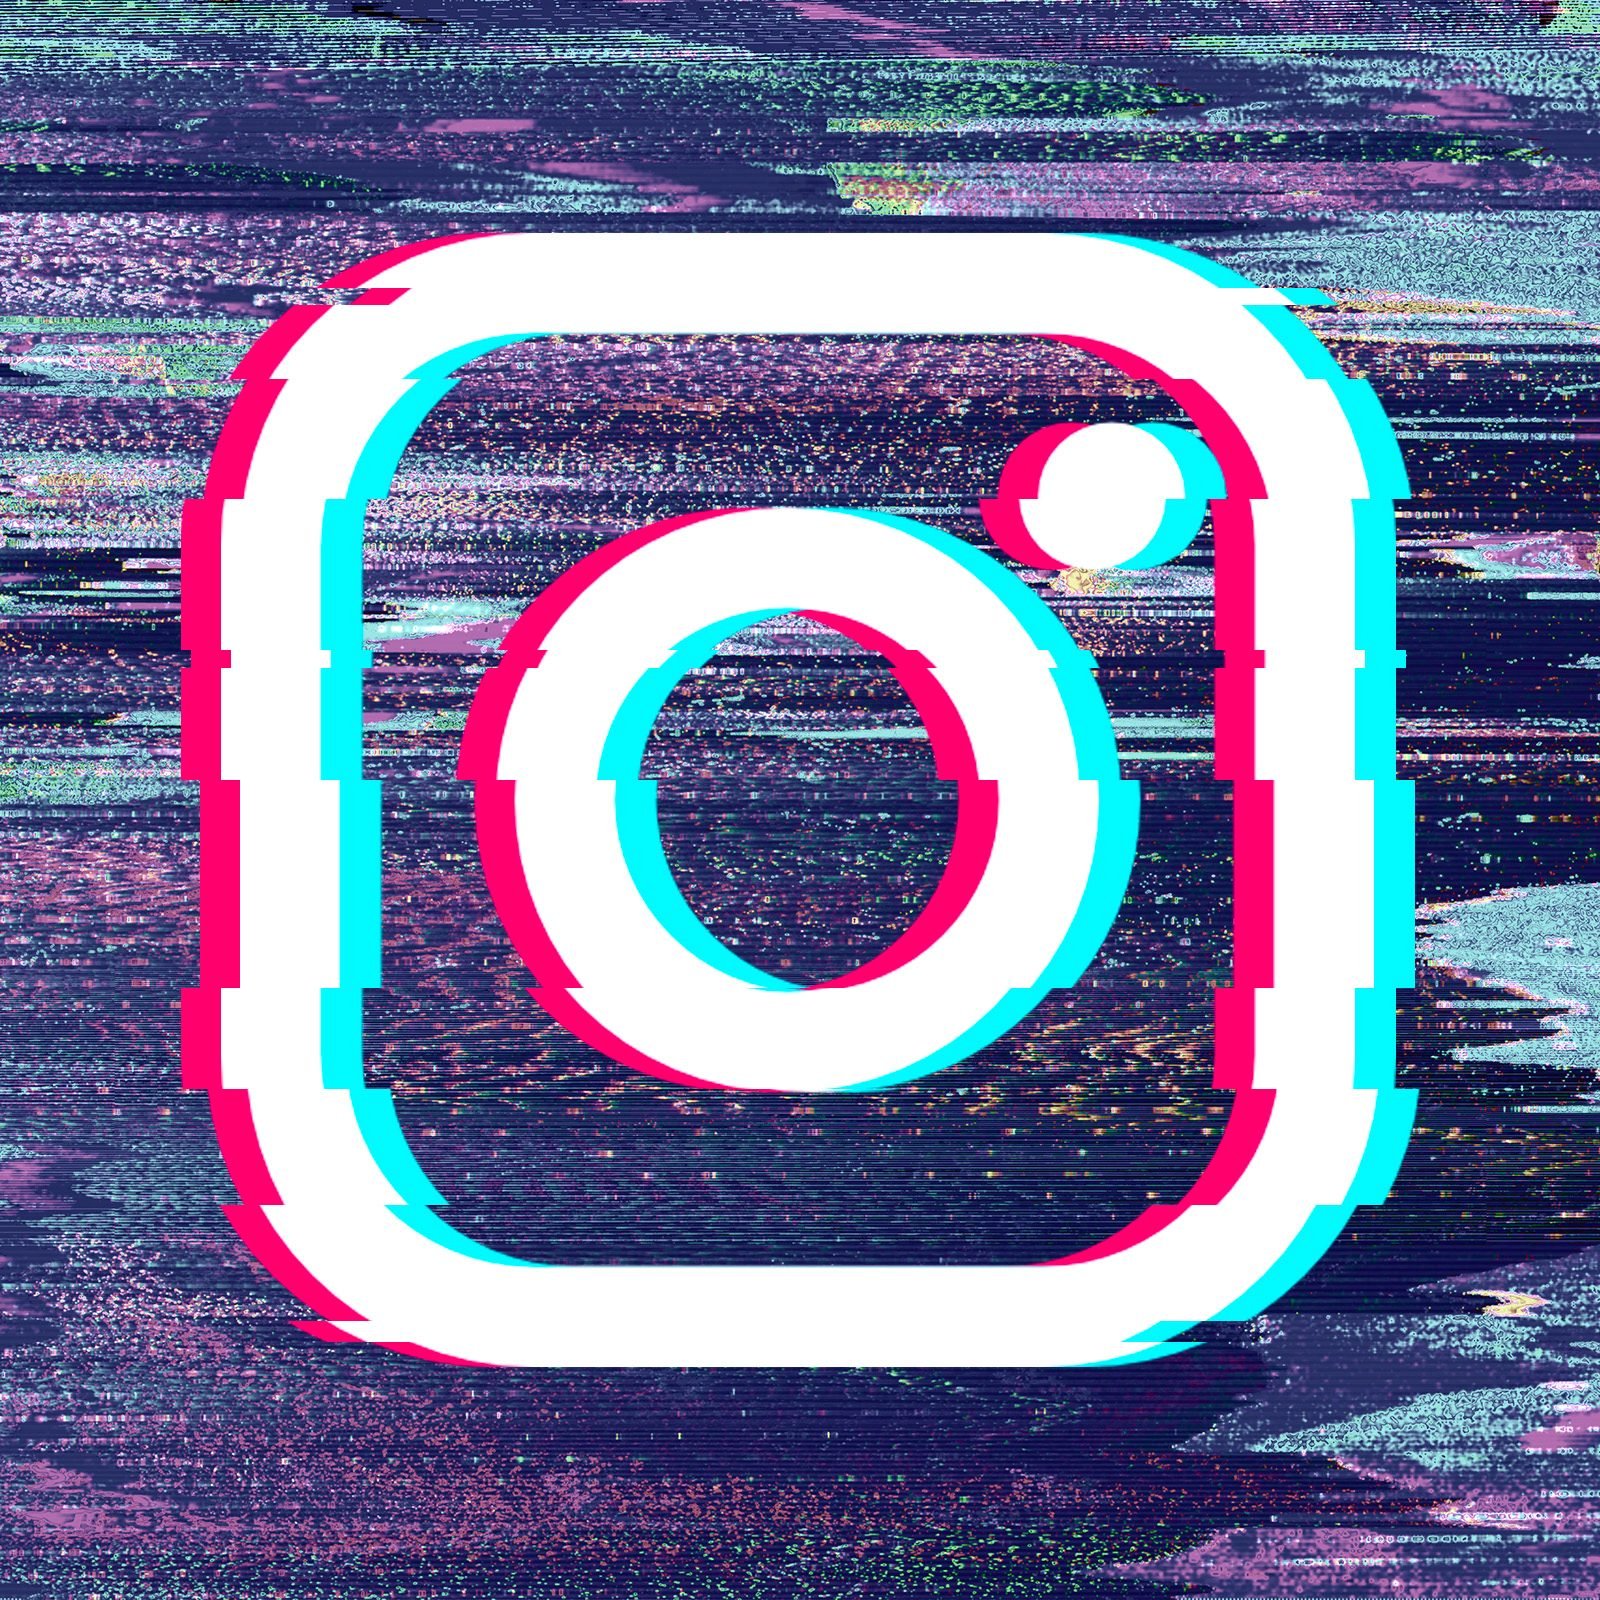 Buy Verified Instagram Account - IG For Sale